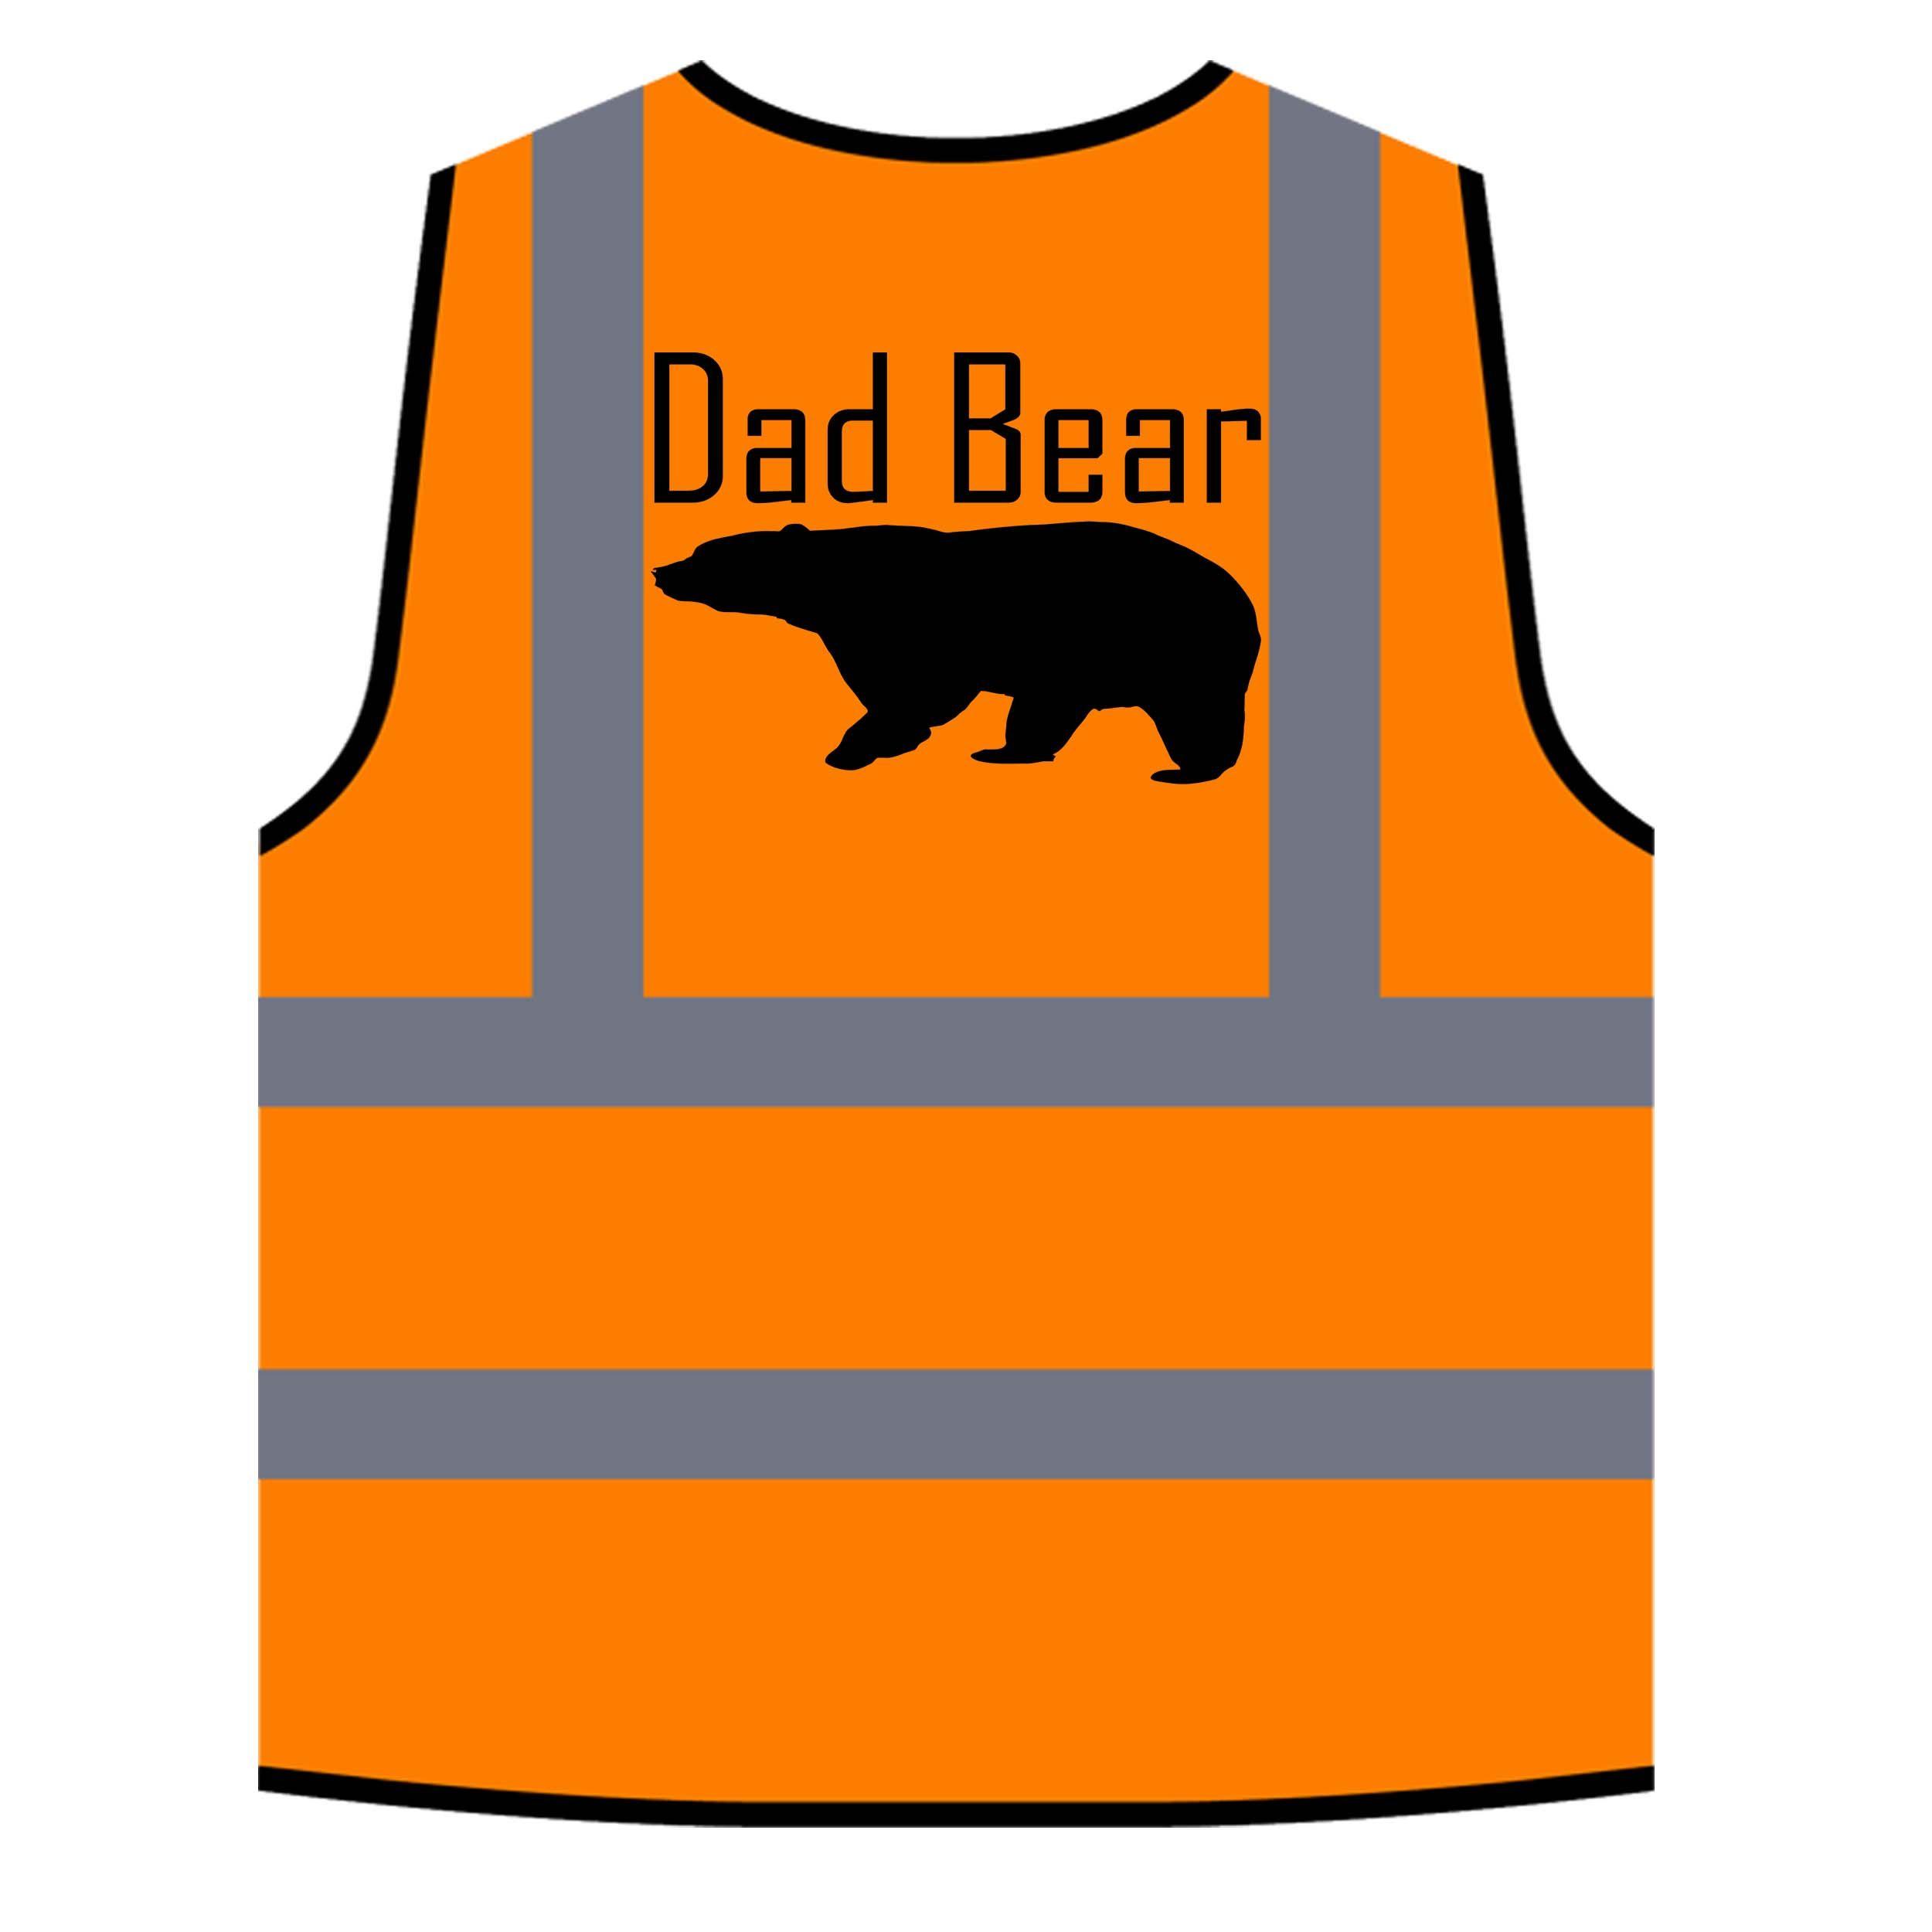 Orange and Black Funny Logo - Dad Bear in Black Family Funny Novelty Yellow/Orange Safety Vest ...